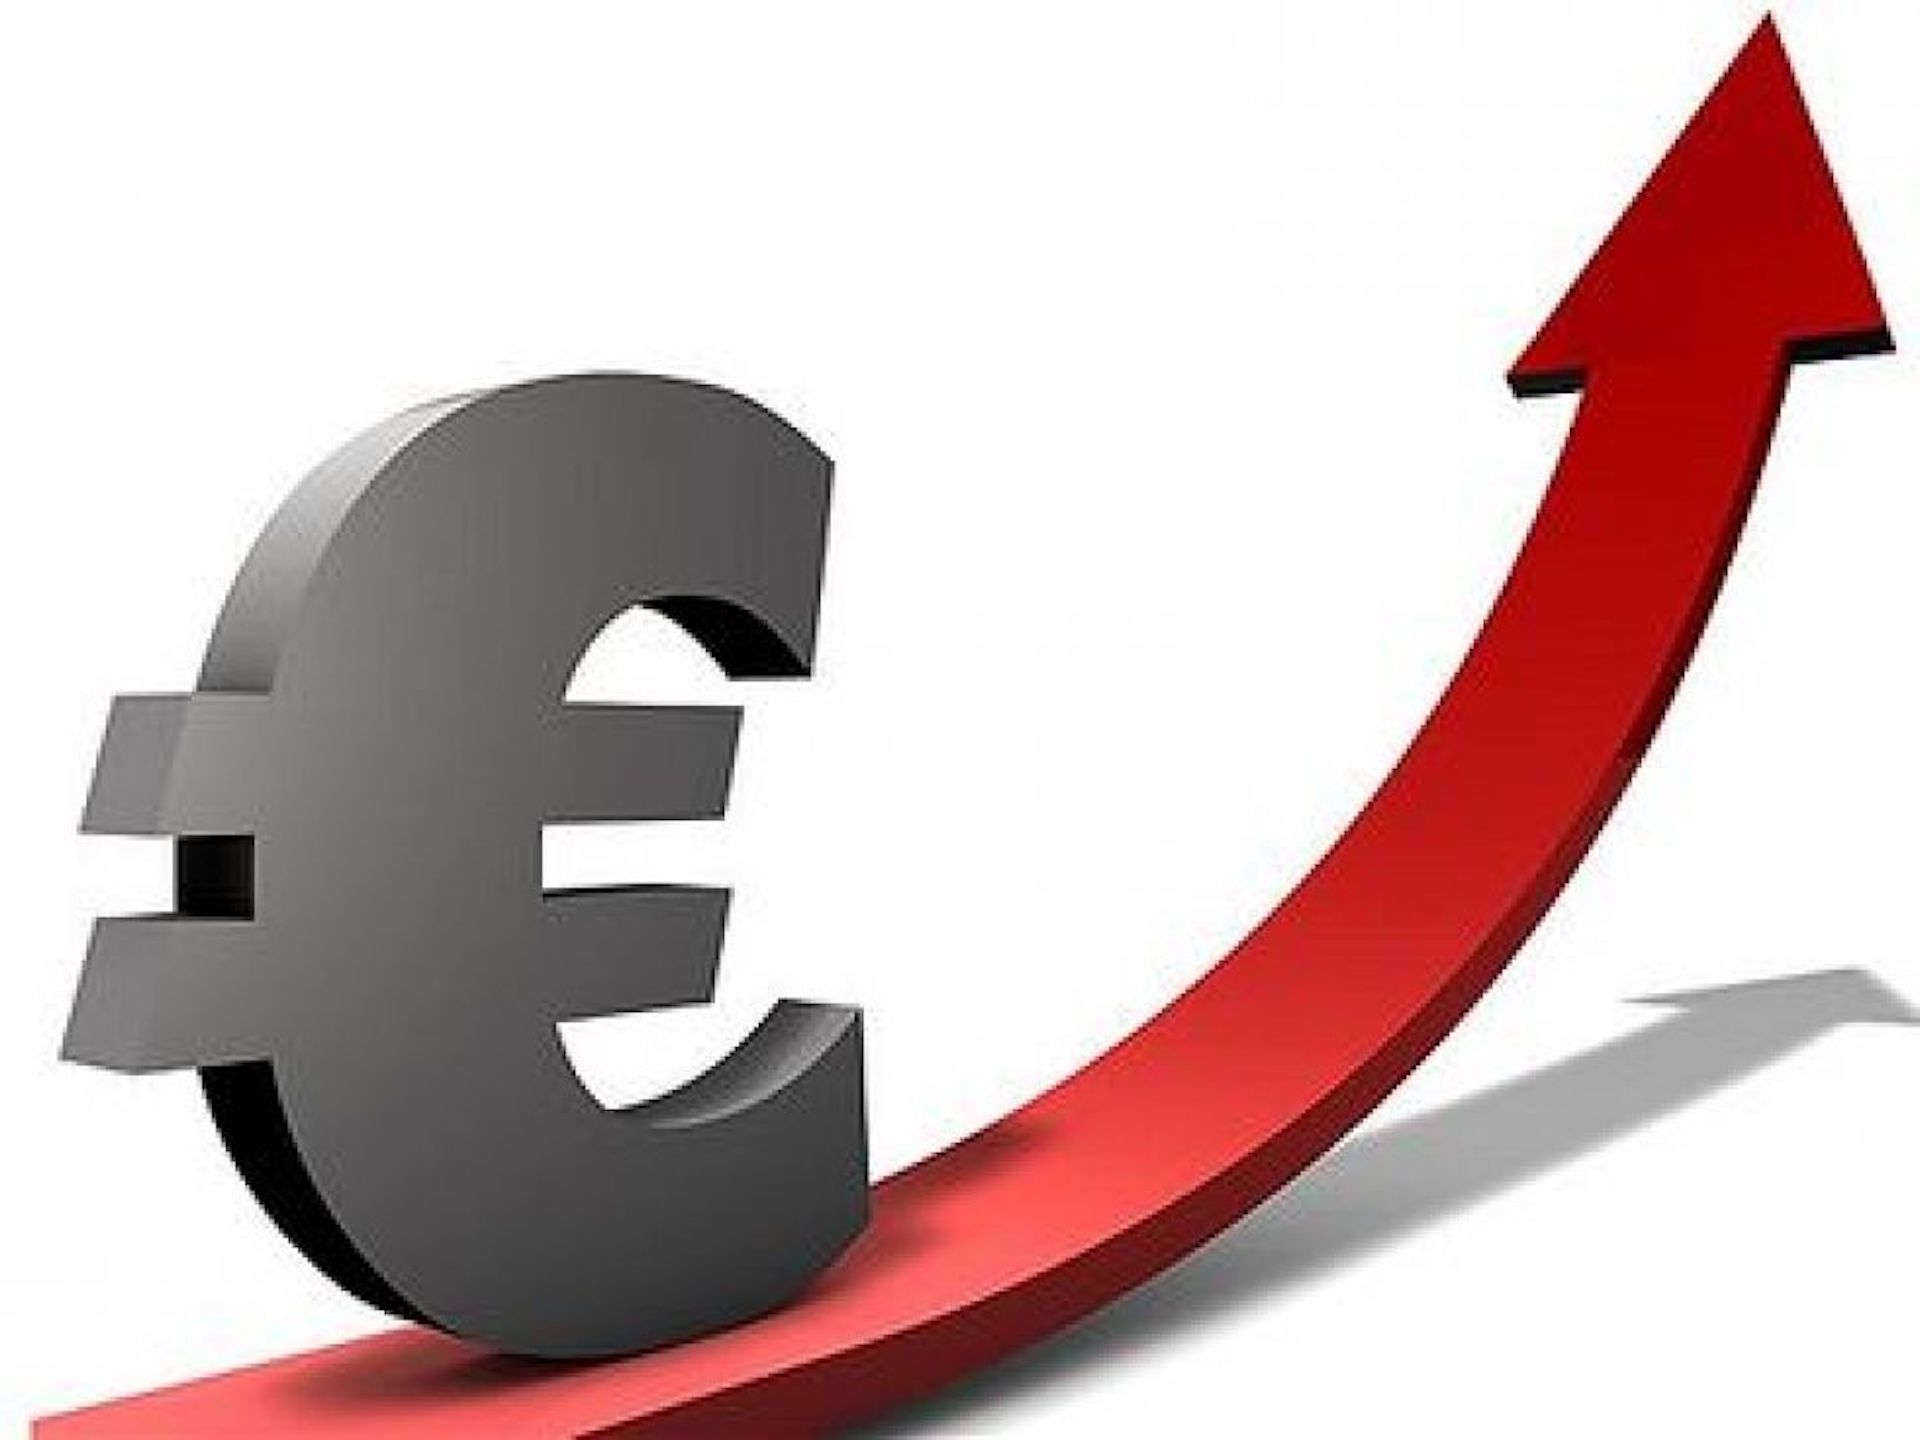 Cost currency. Рост курса валют. Рост евро. Повышение евро. Евро растет.